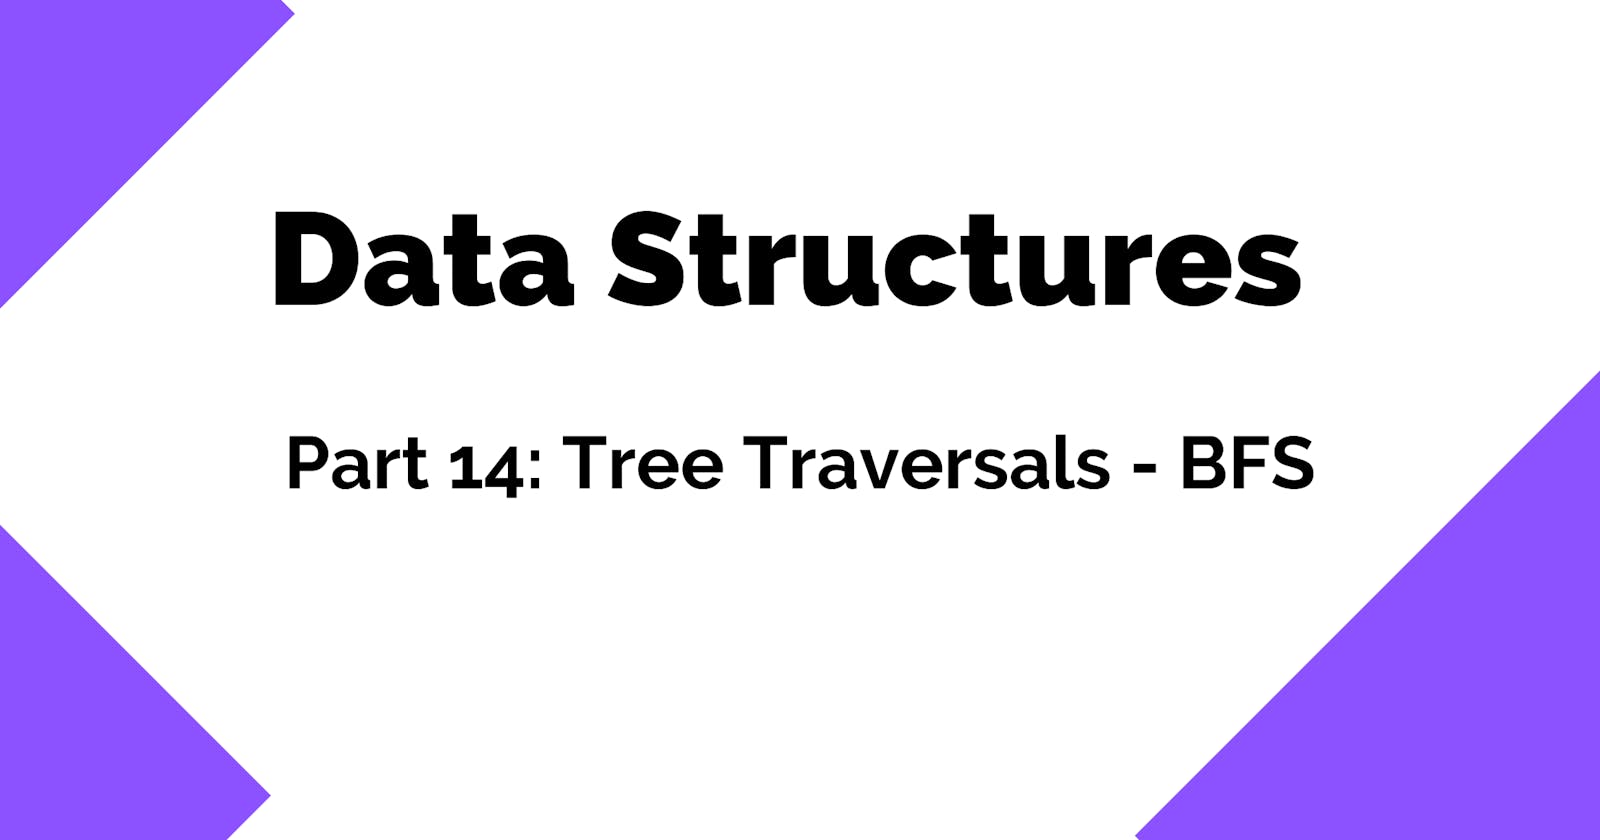 Data Structures 101: Tree Traversal - BFS